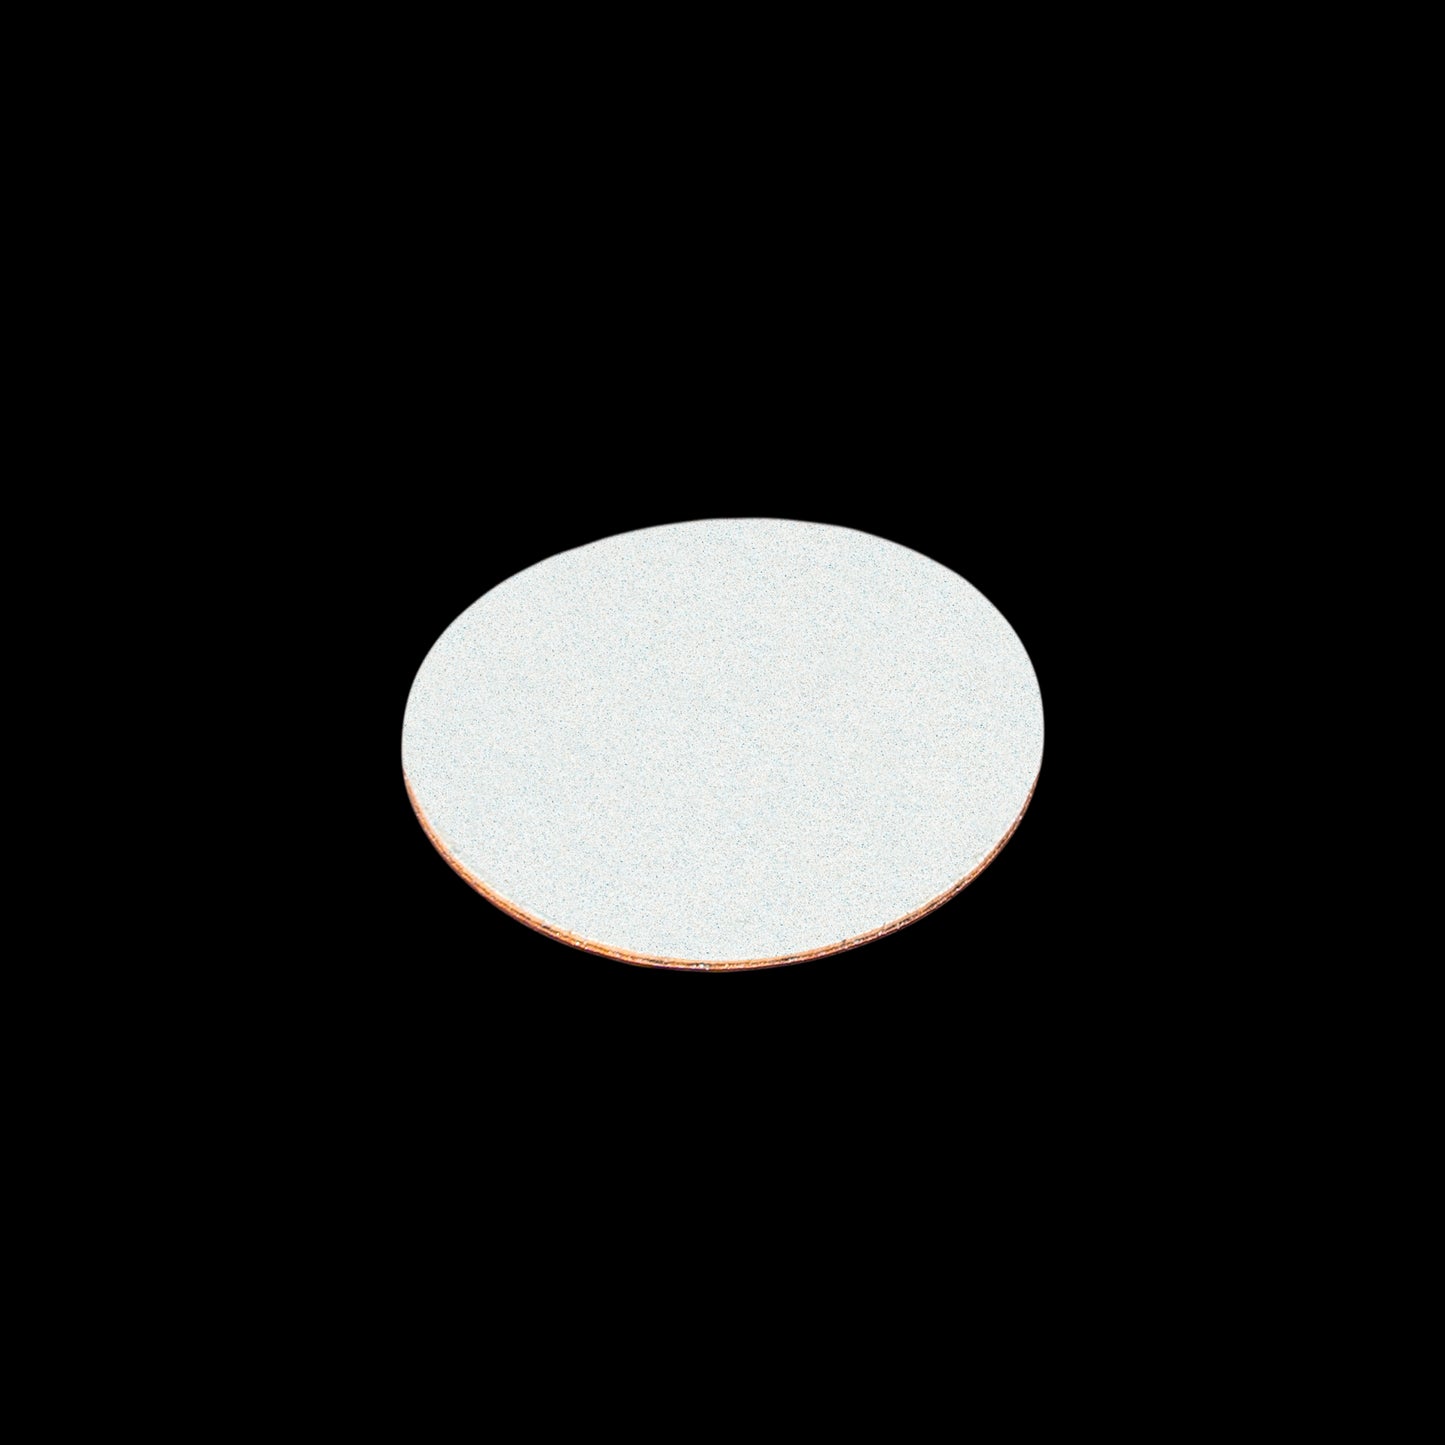 Staleks White refill pads for pedicure disc PODODISC STALEKS PRO M 320 grit (50 pc)